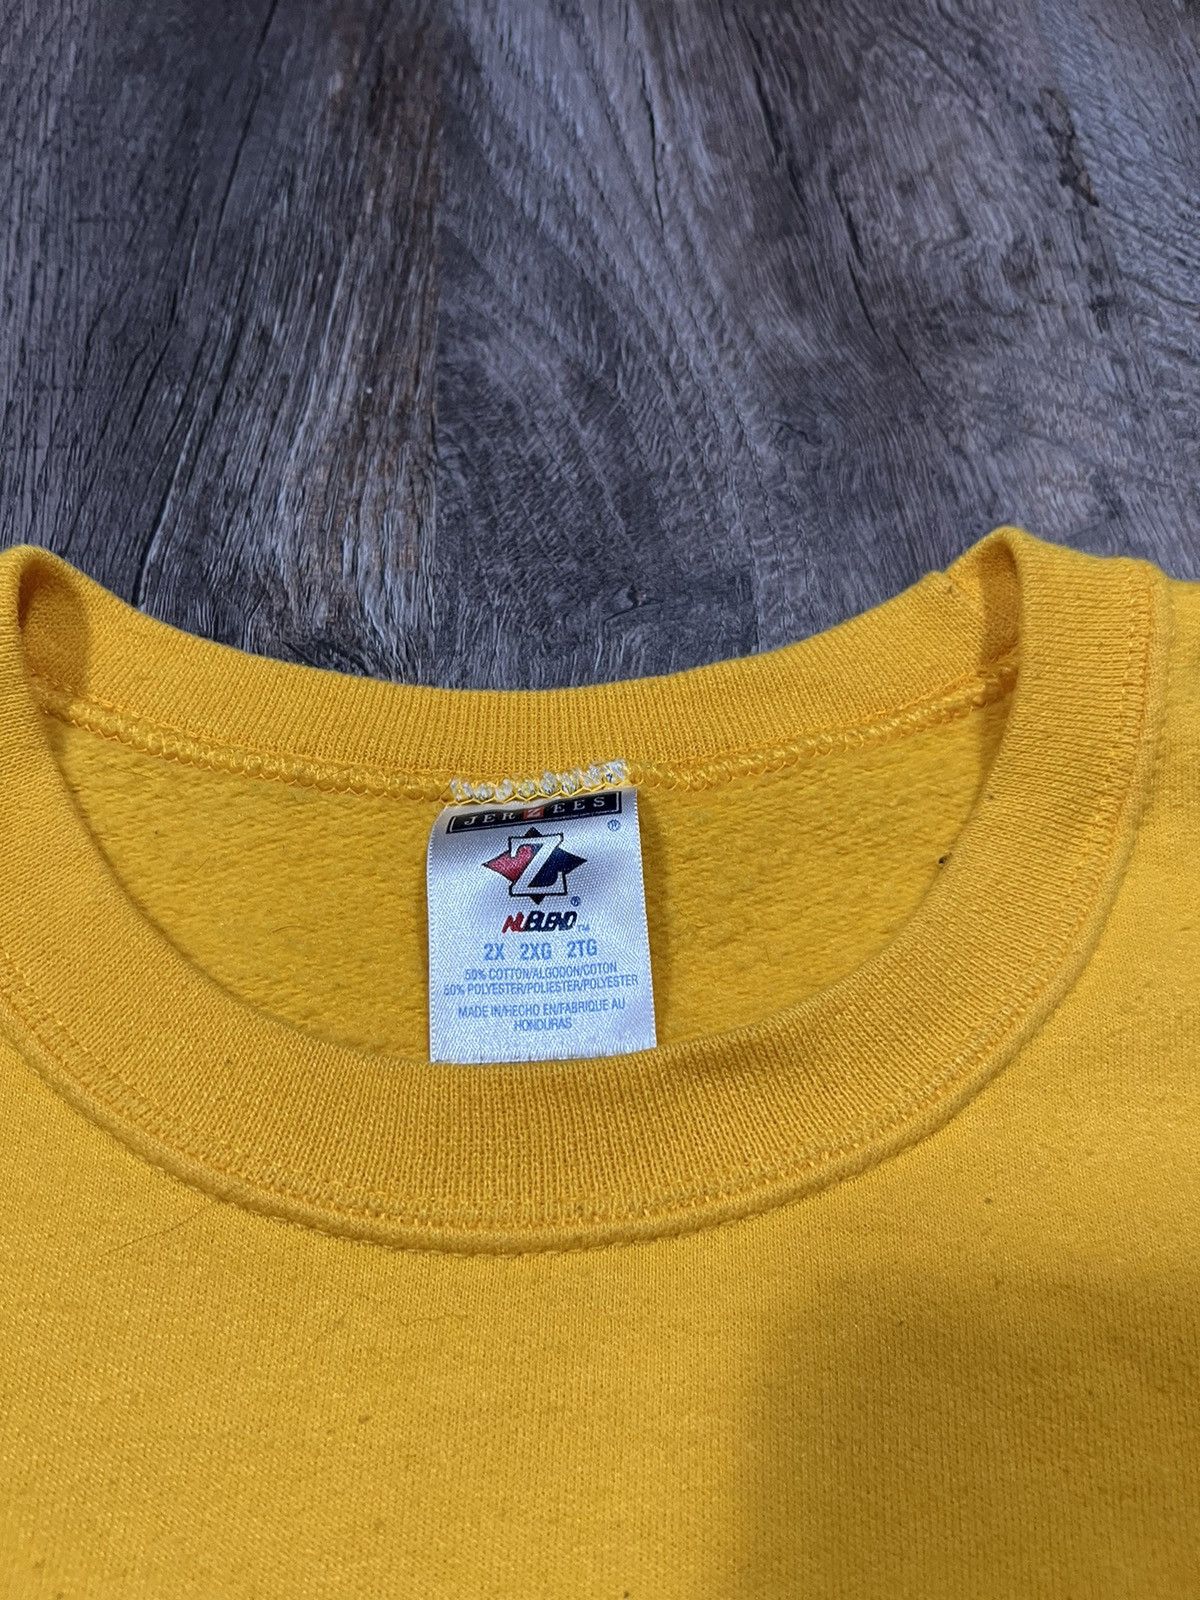 Vintage Vintage Minnesota Vikings Sweatshirt Size US XXL / EU 58 / 5 - 4 Thumbnail